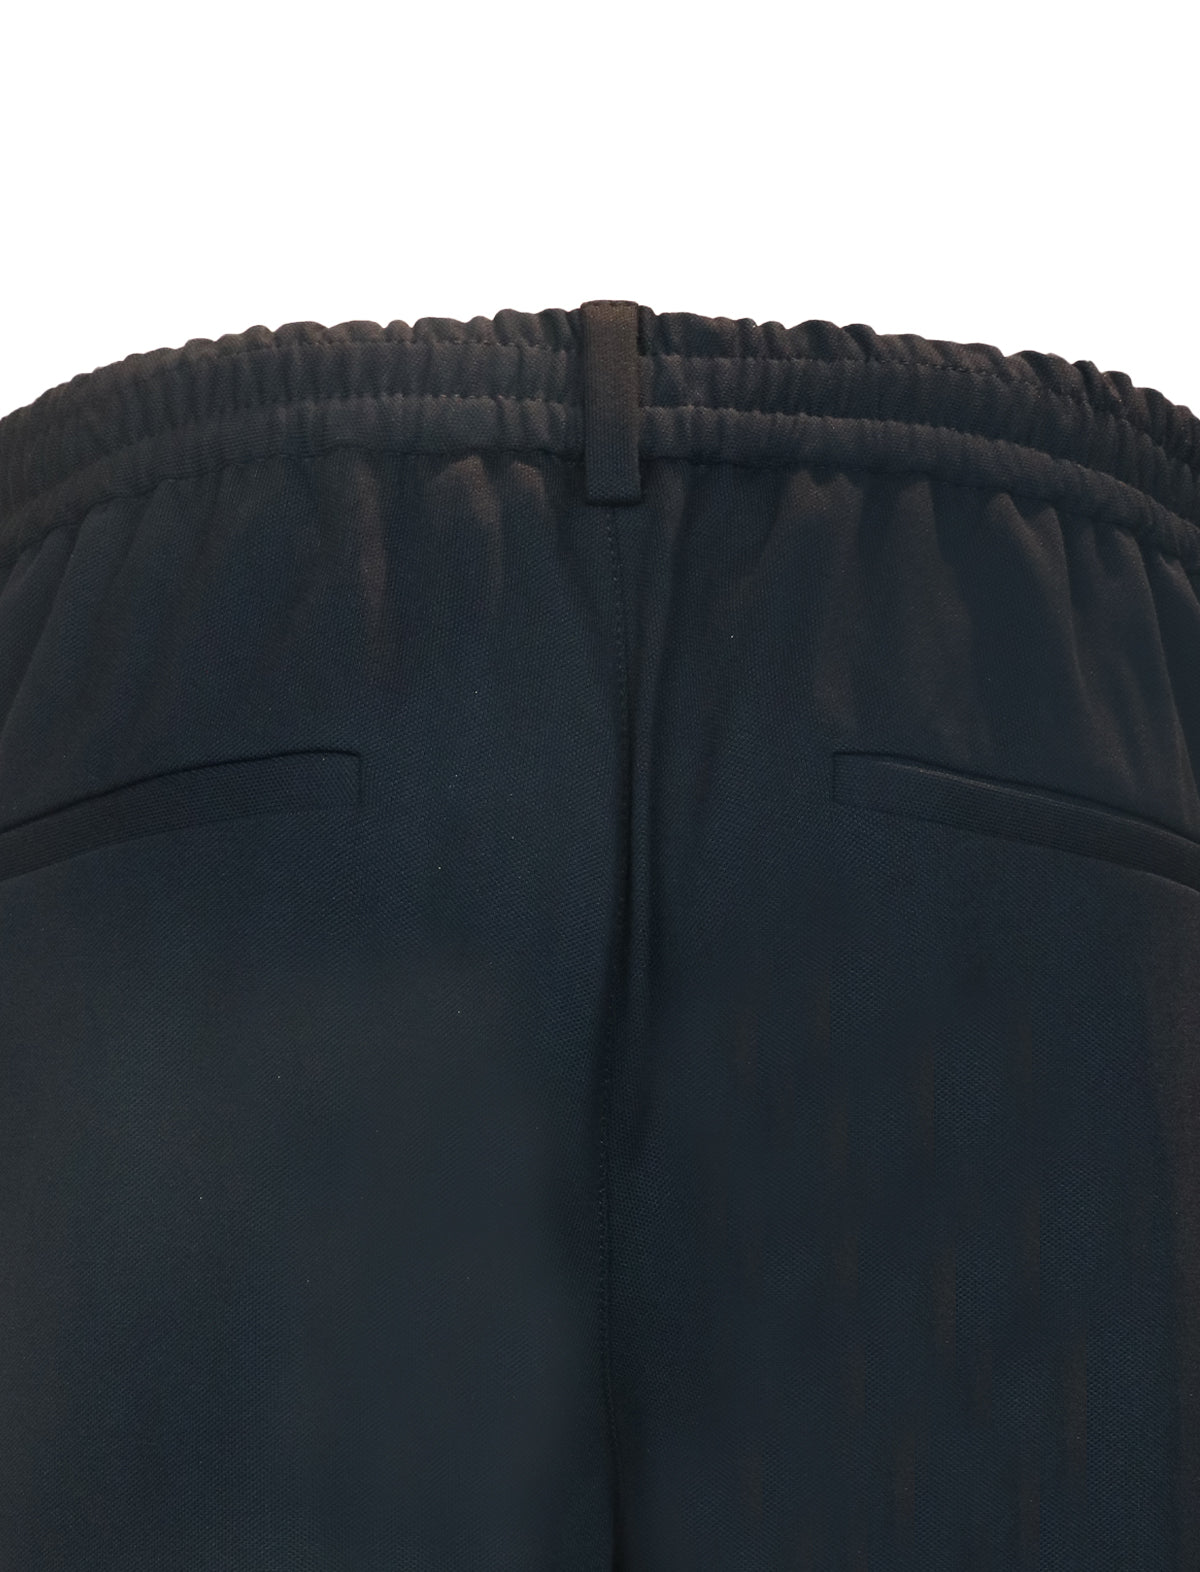 CIRCOLO 1901 Cotton-Blend Trouser in Navy